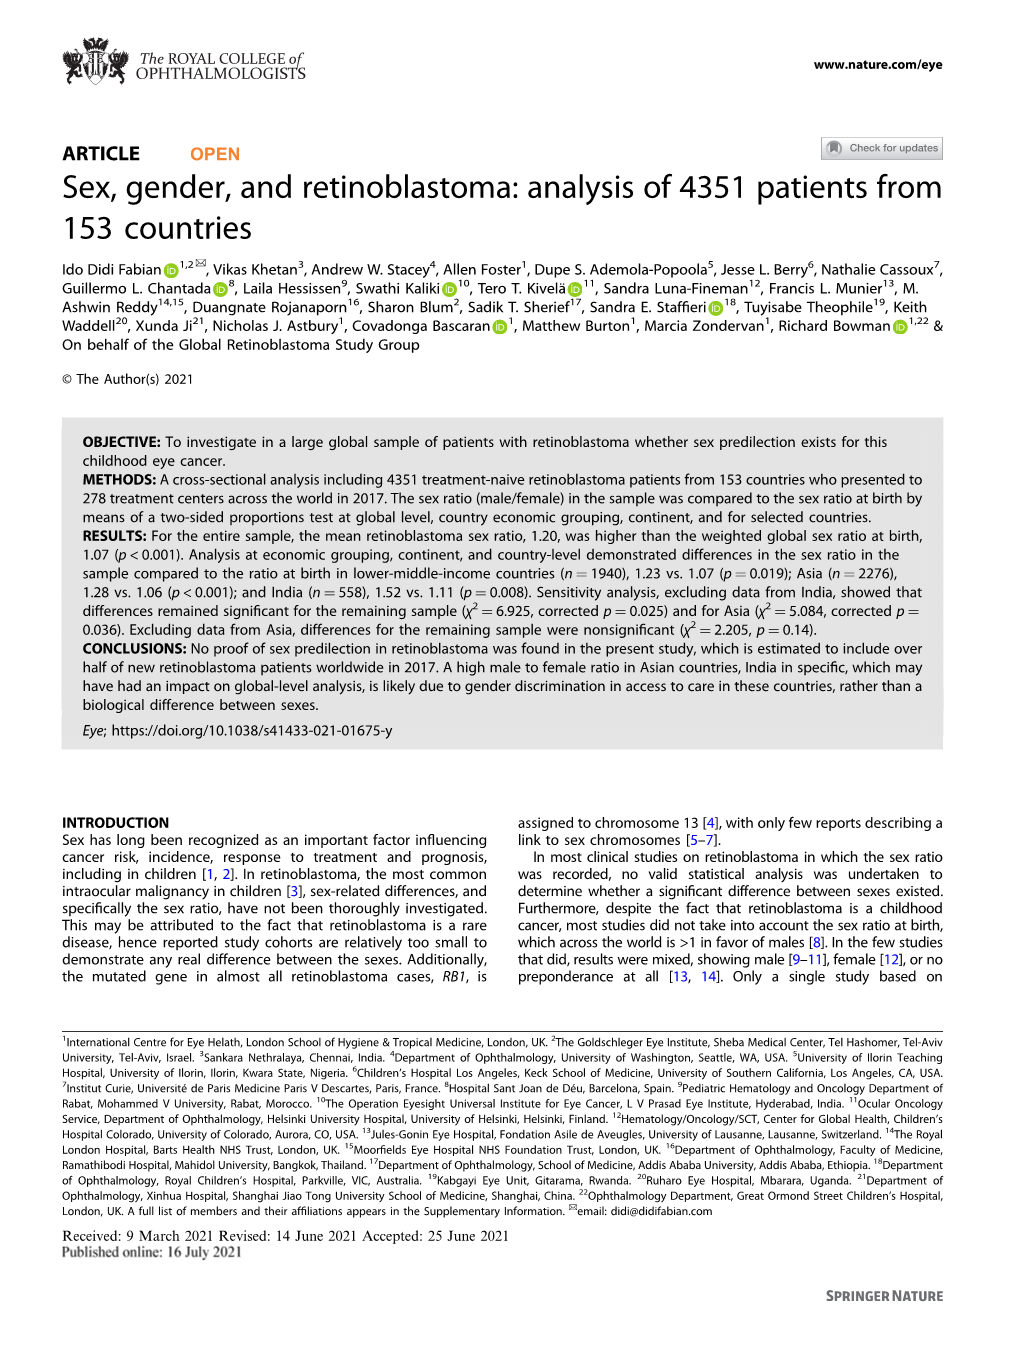 Sex, Gender, and Retinoblastoma: Analysis of 4351 Patients from 153 Countries ✉ Ido Didi Fabian 1,2 , Vikas Khetan3, Andrew W